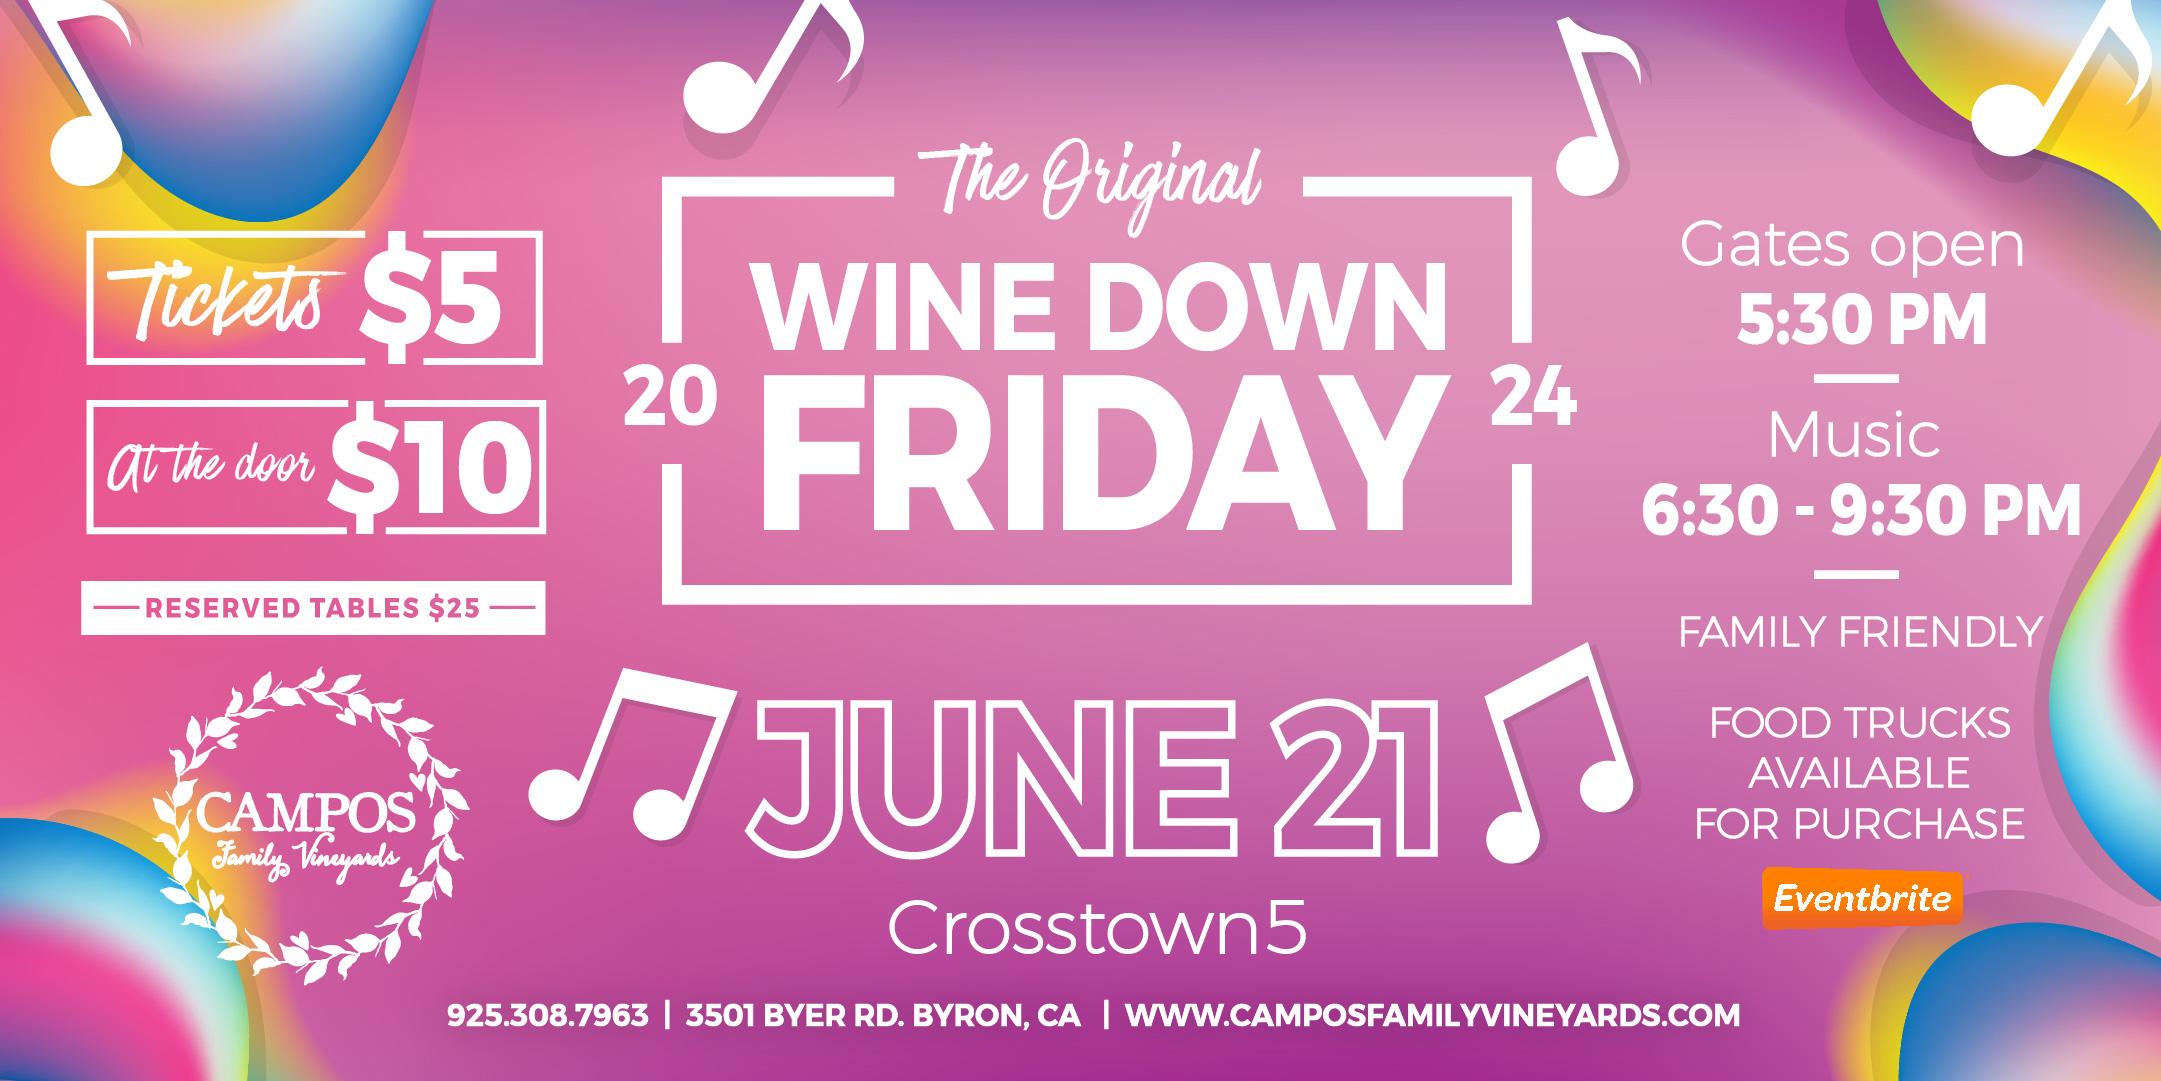 The Original Wine Down Friday - Crosstown5